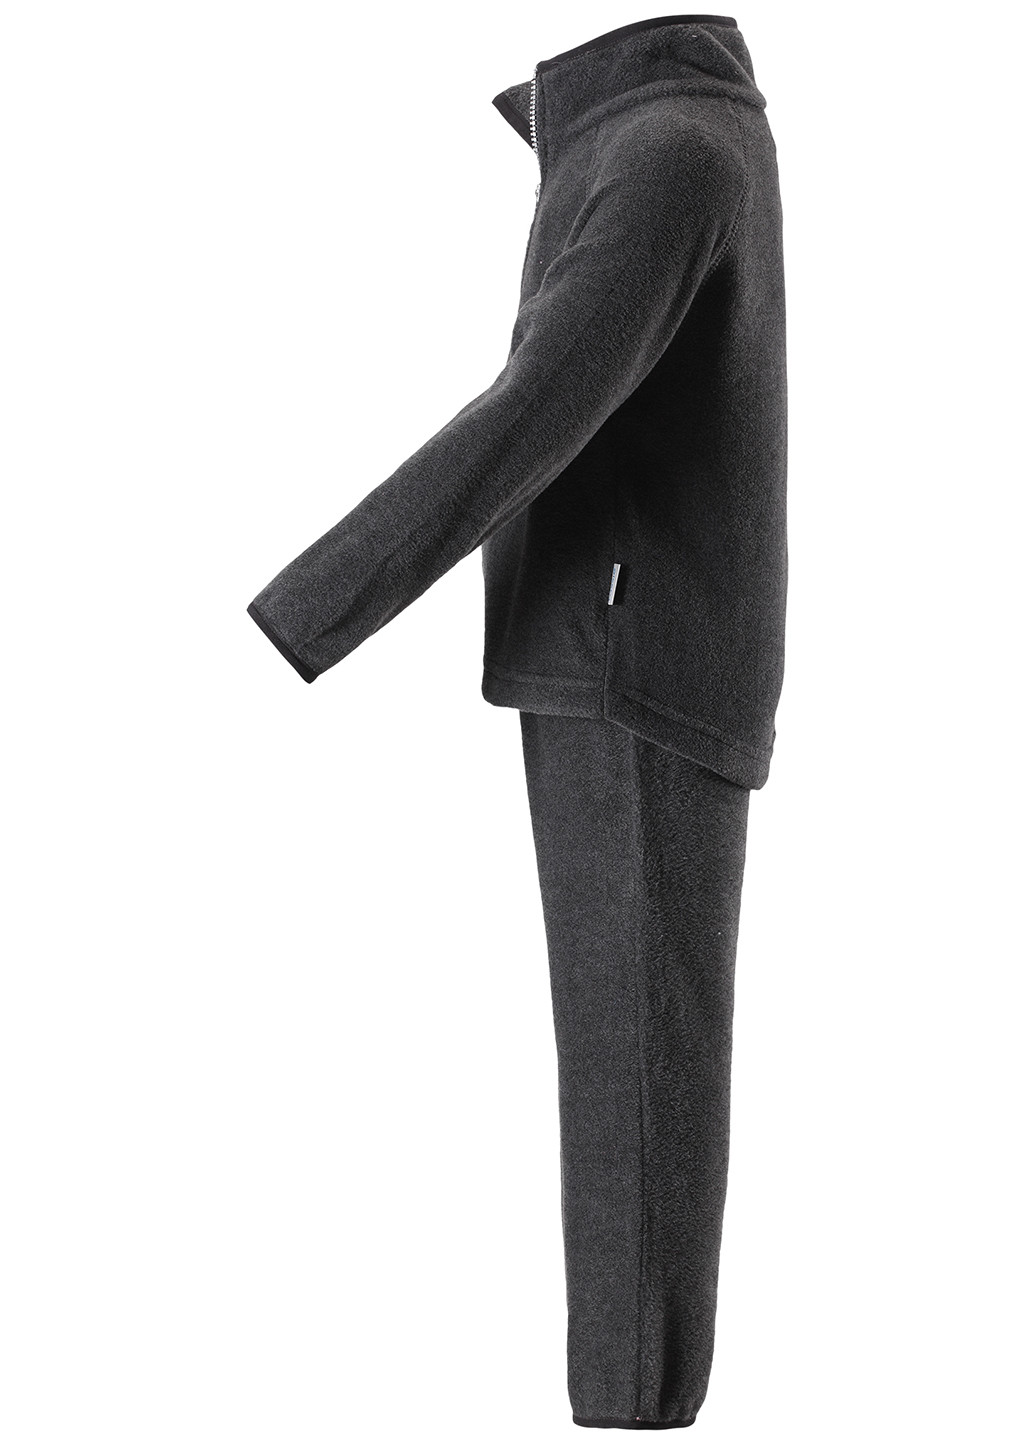 Грифельно-серый демисезонный костюм (кофта, брюки) брючный Lassie by Reima